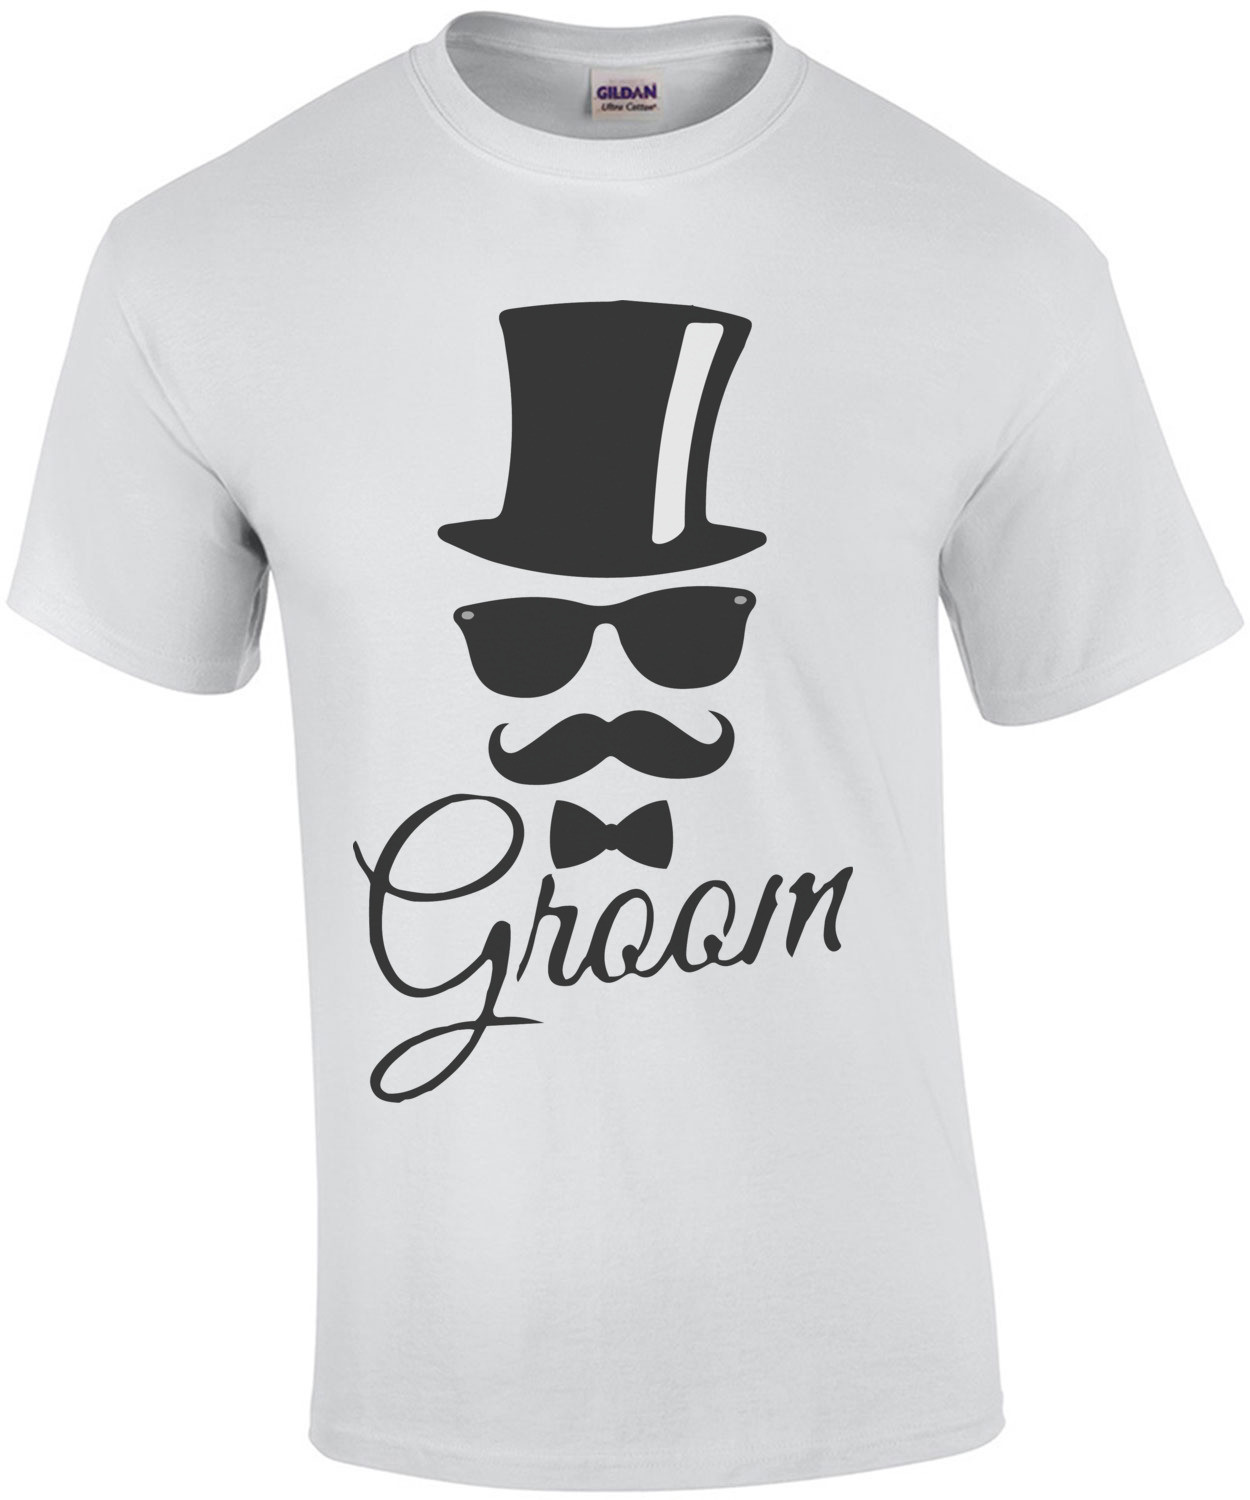 Groom - Funny Wedding T-Shirt